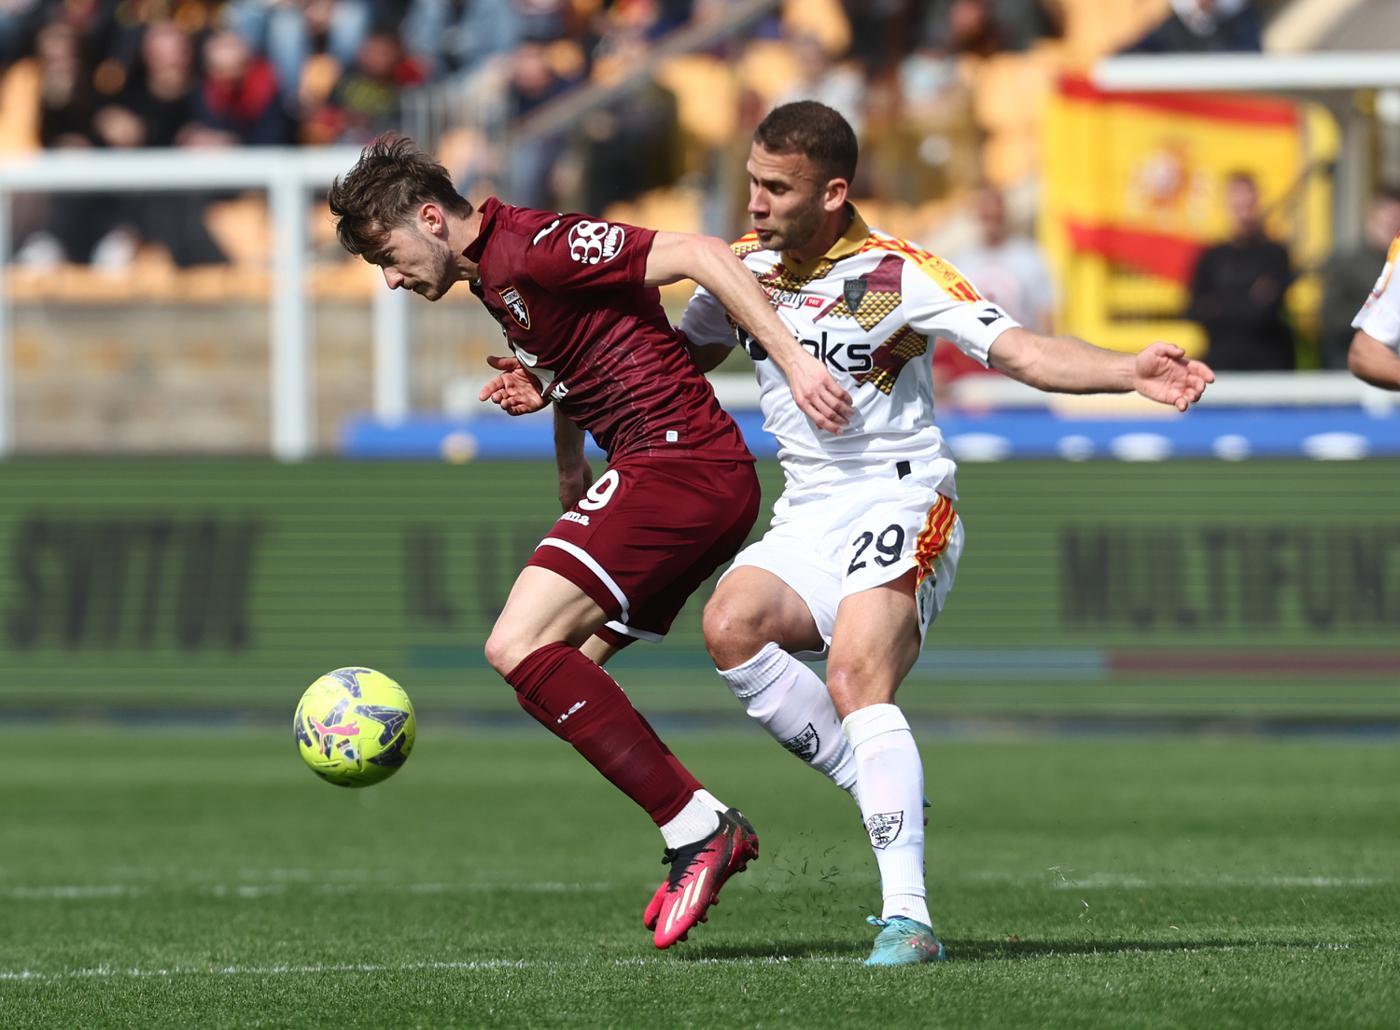 Lecce - Torino - 0:2. Italian Championship, round 26. Match review, statistics.